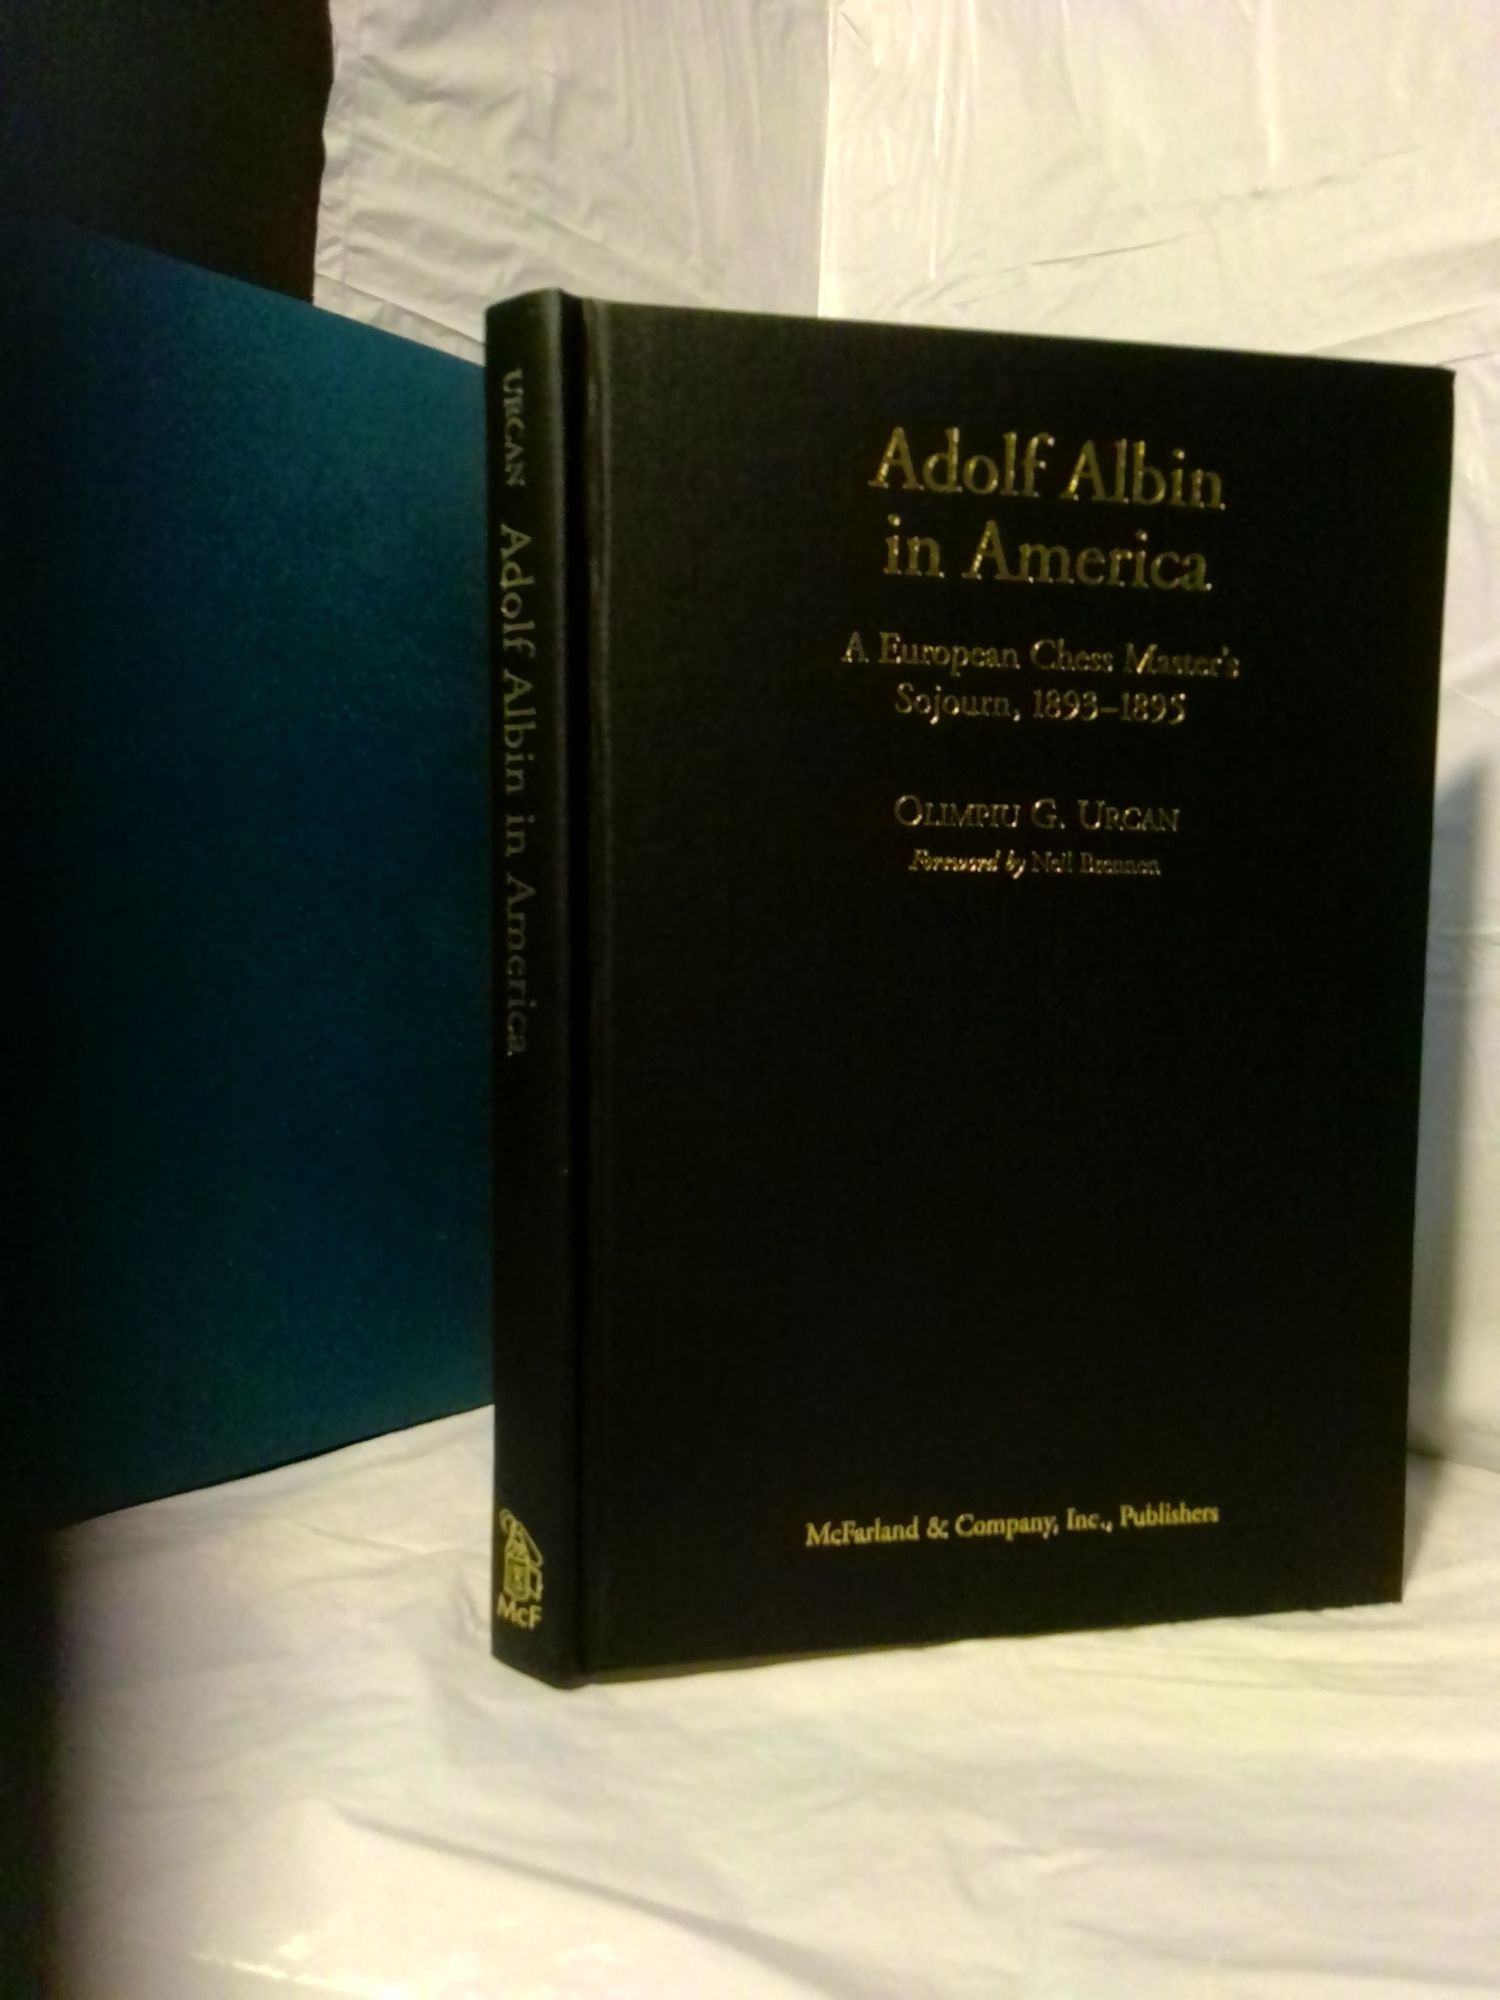 ADOLF ALBIN IN AMERICA: A EUROPEAN CHESS MASTER'S SOJOURN, 1893-1895 - Urcan, Olimpiu G.